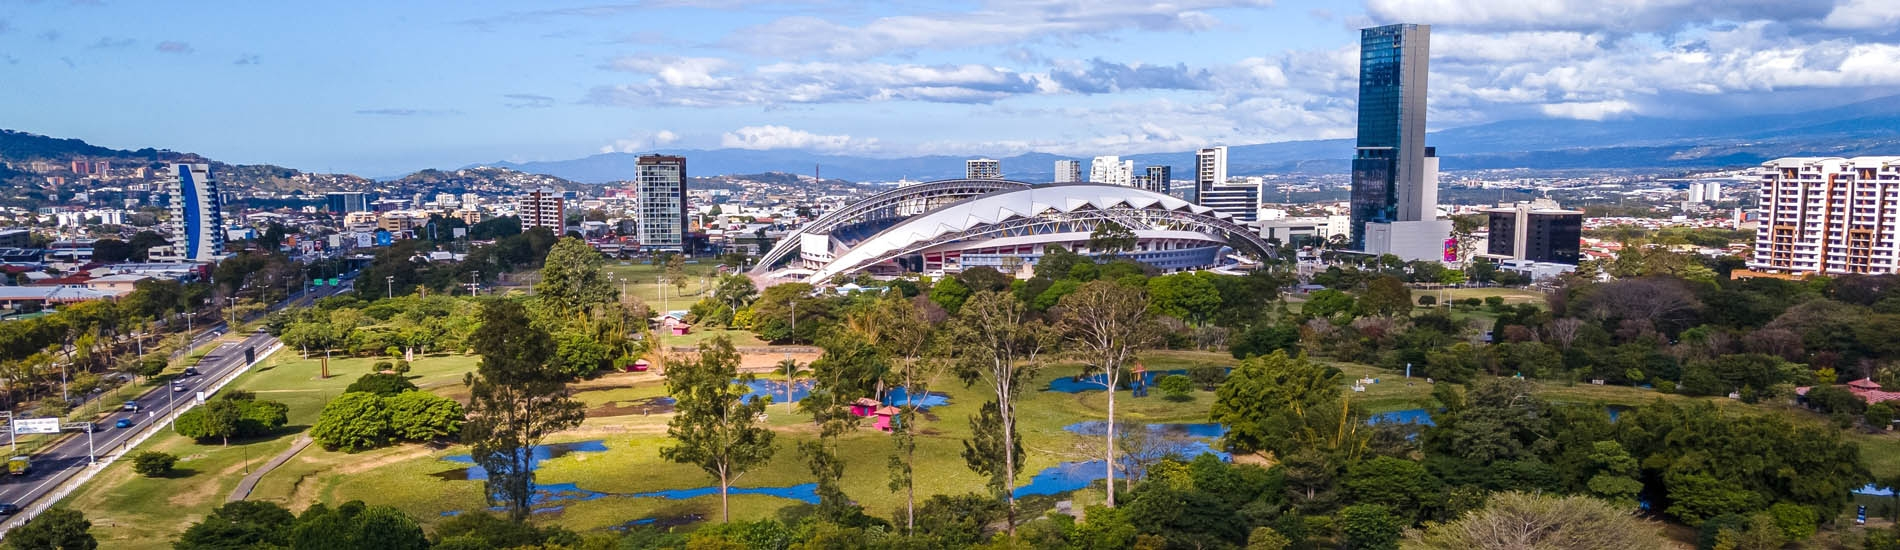 Panoramic view of San Jose city - Costa Rica